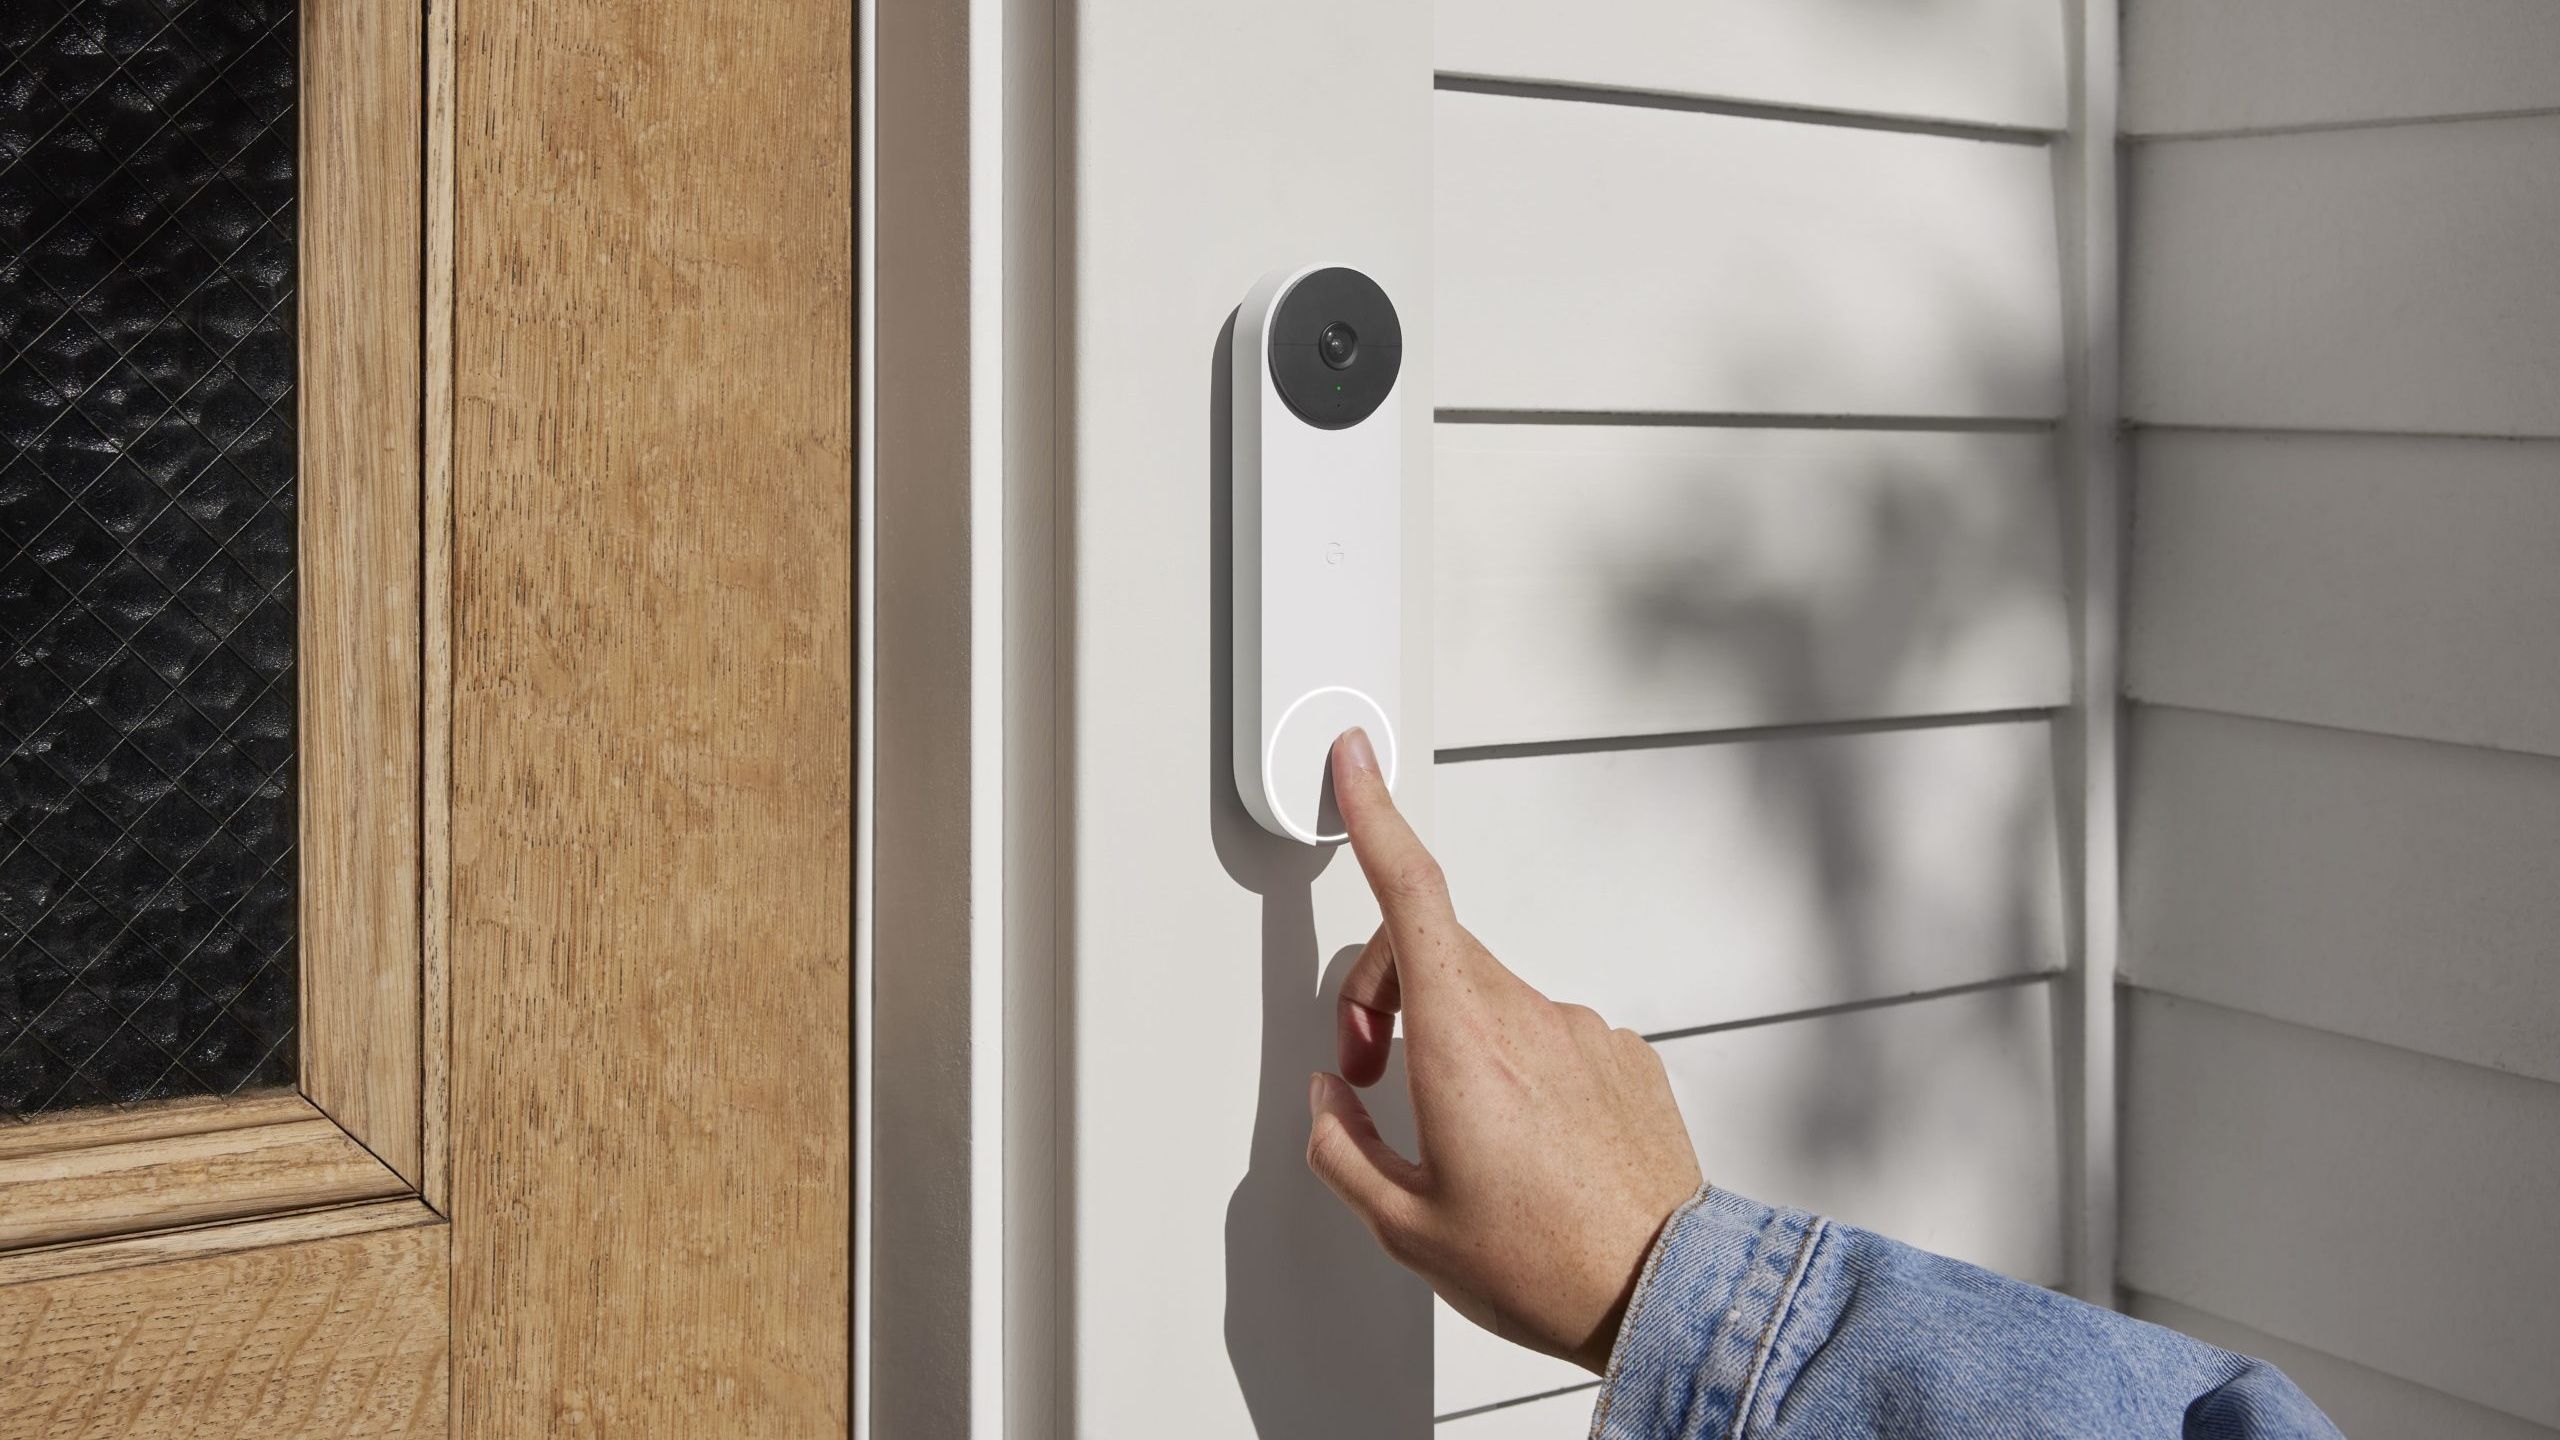 Google Nest smart doorbell in Snow white